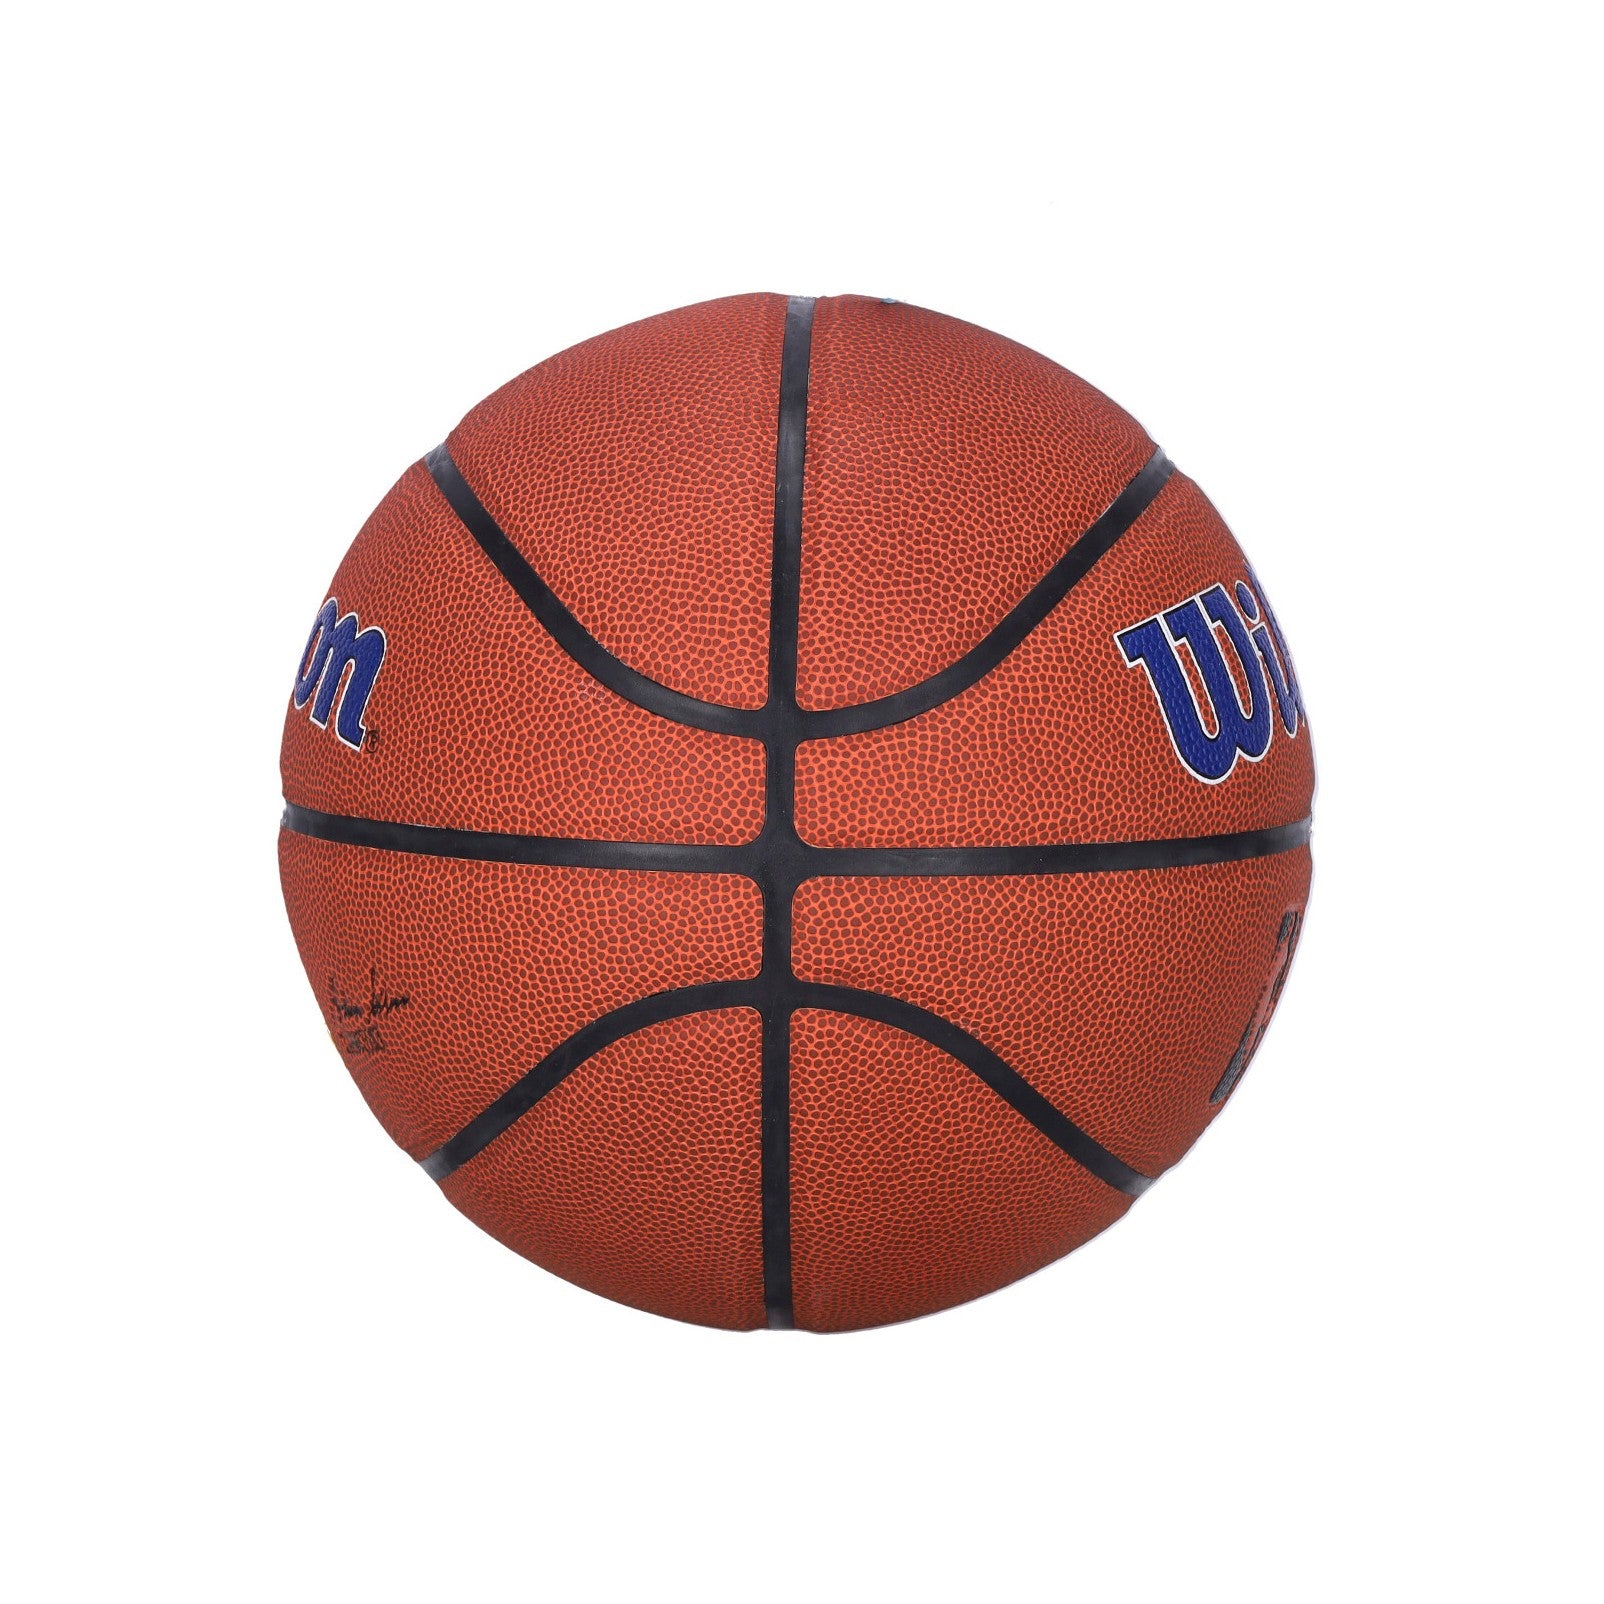 Pallone Uomo Nba Team Alliance Basketball Size 7 Golwar Brown/original Team Colors WTB3100XBGOL